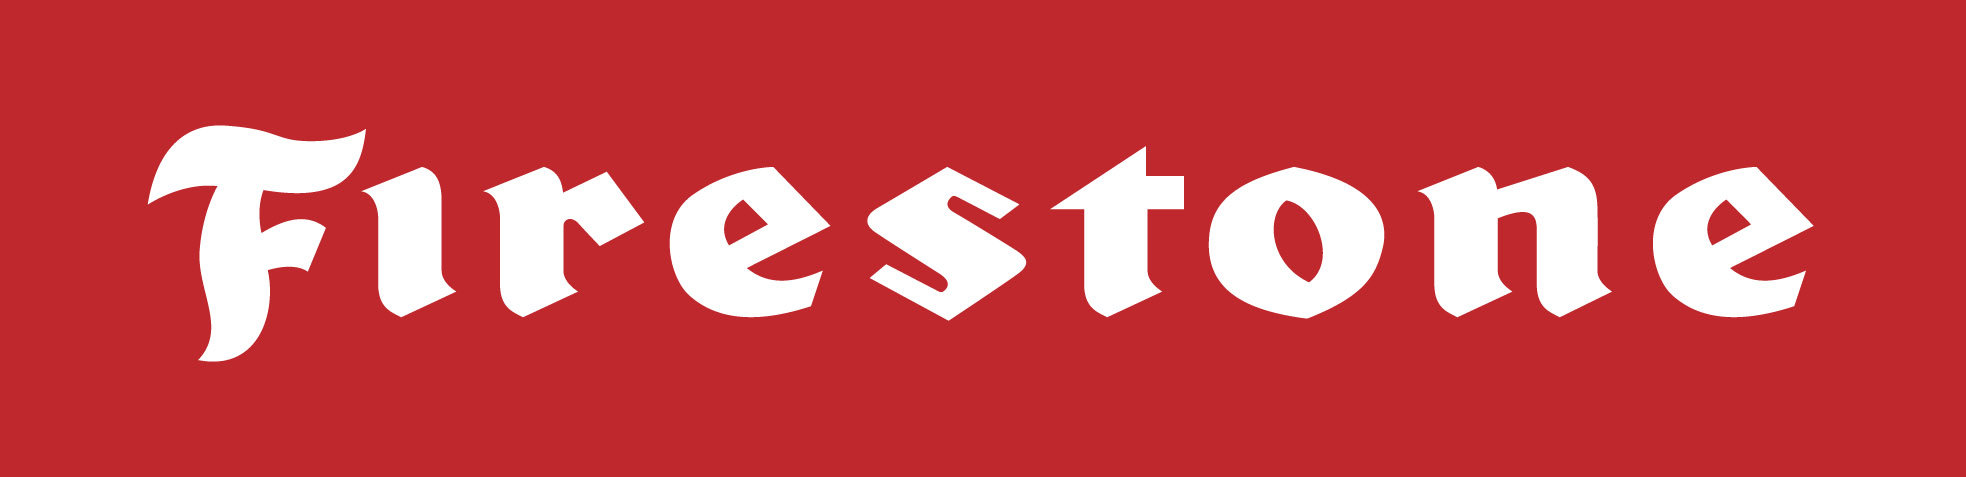 Firestone Logo PNG - 175061